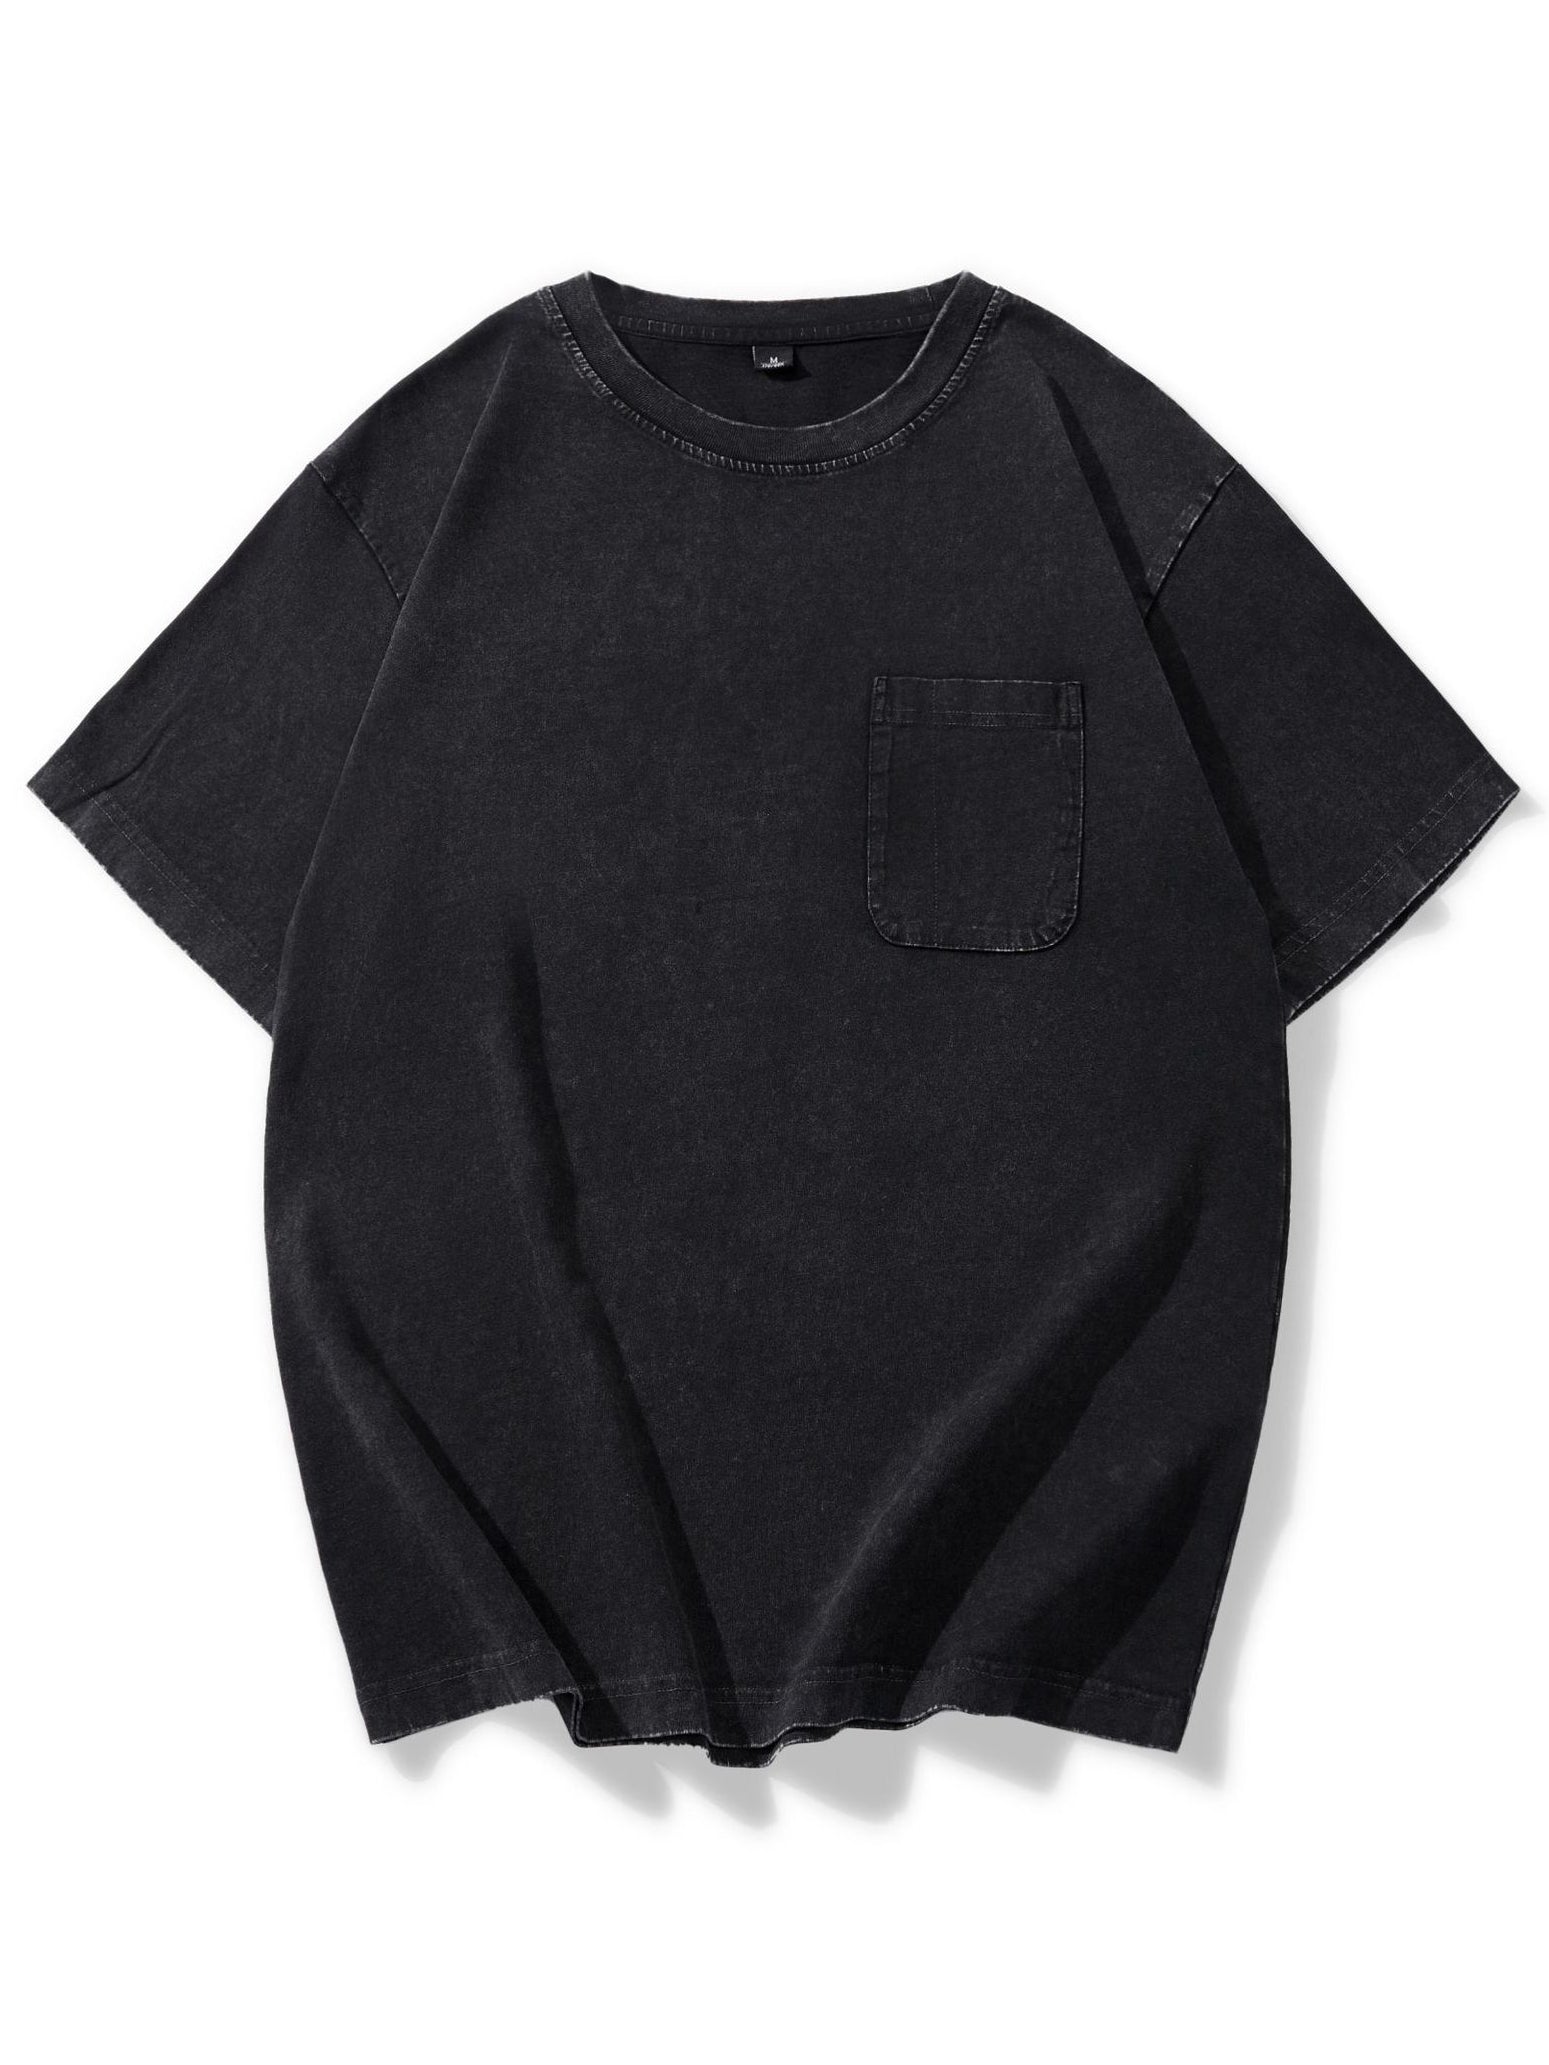 Men's High Quality Cotton Basics Washed Distressed Pocket Crew Neck T-Shirt